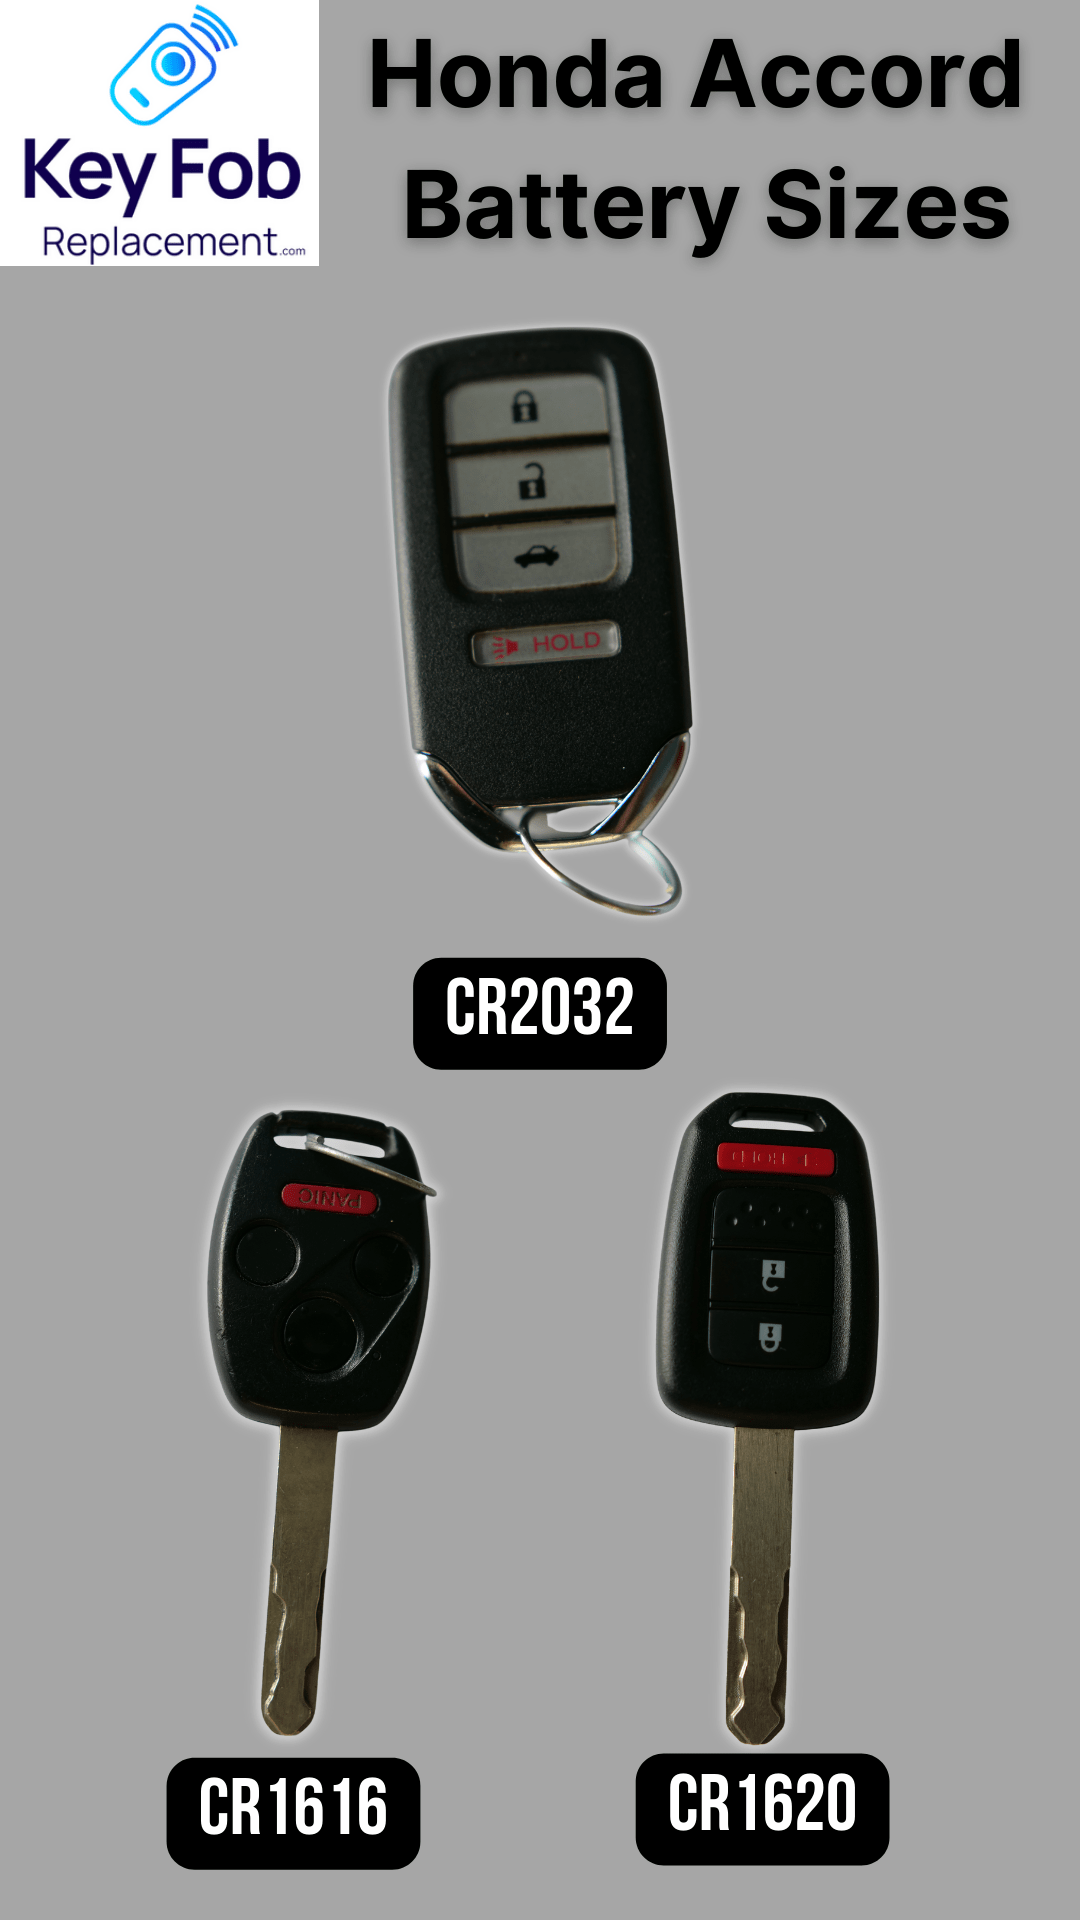 Honda Accord Key Fob Battery Sizes